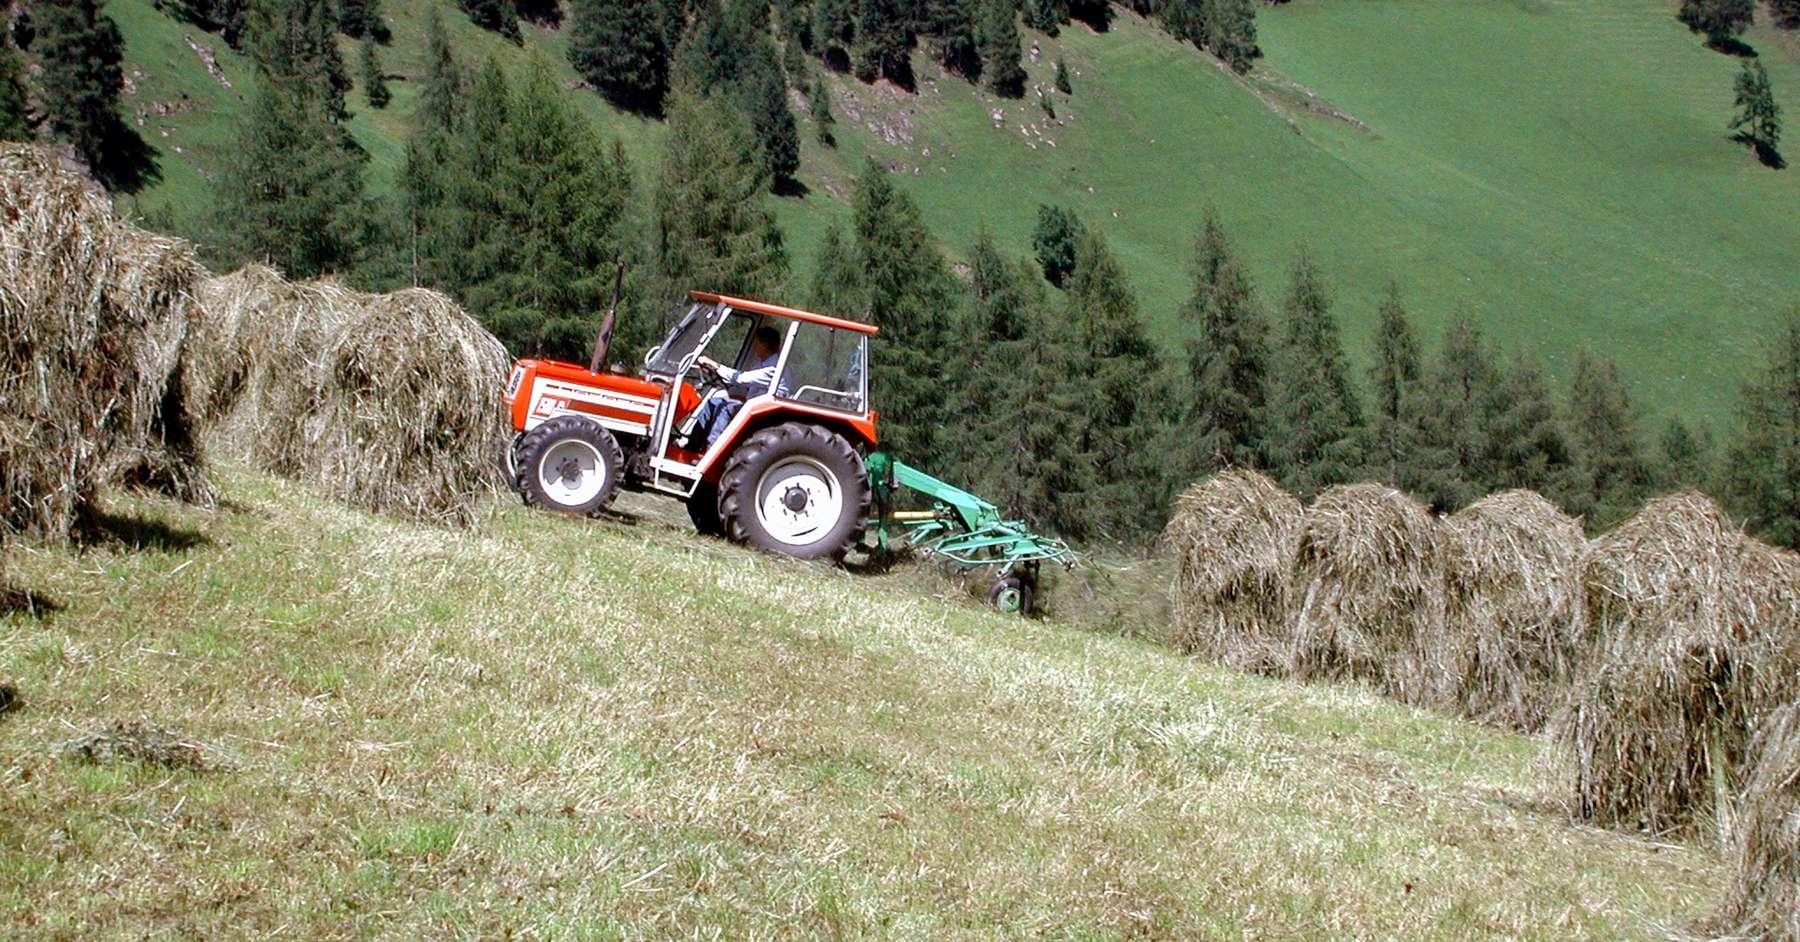 Traktor am Berg.jpg